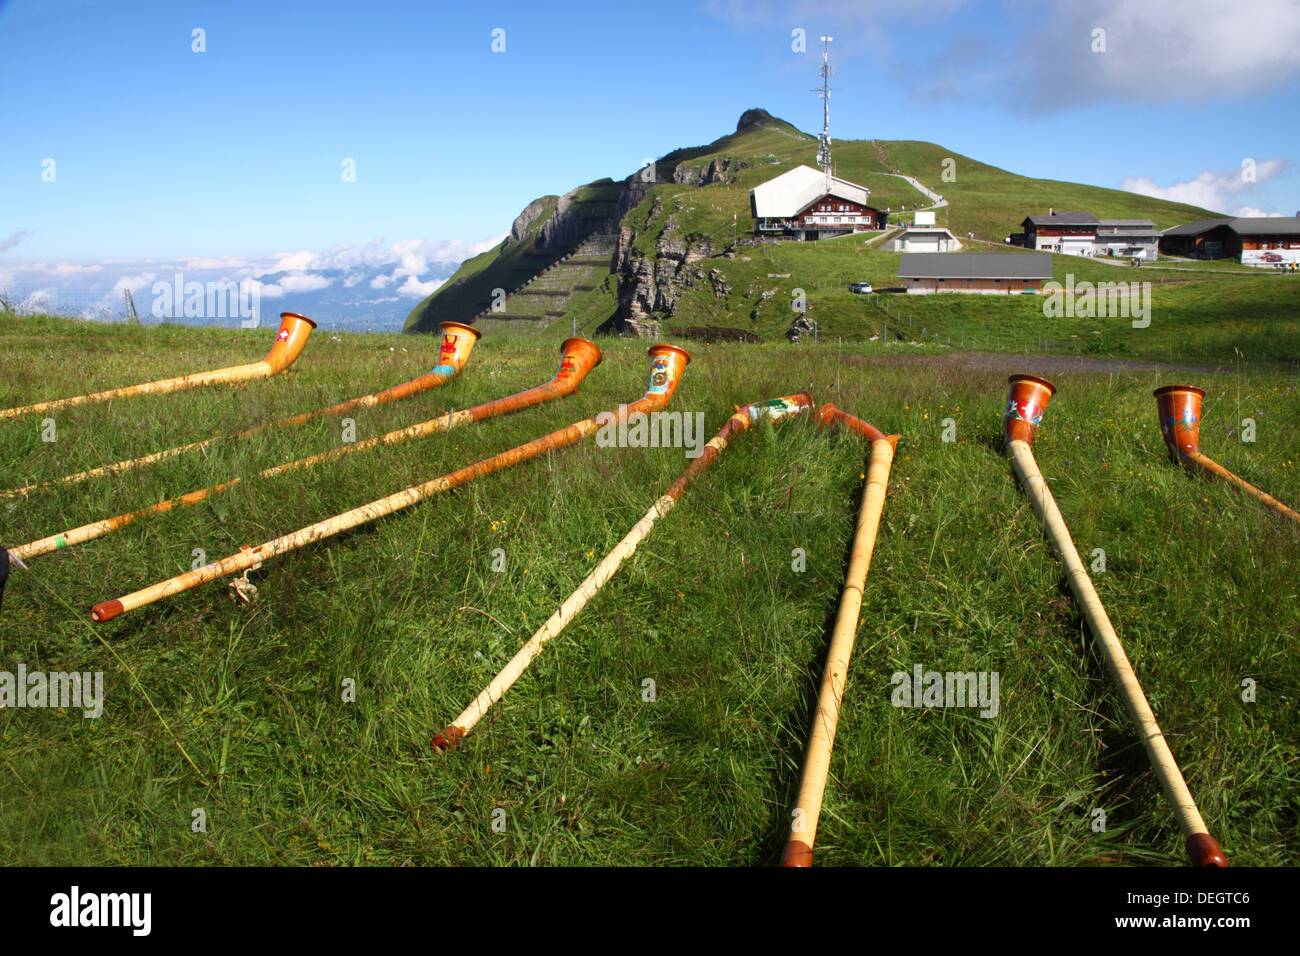 A line of Alpenhorns on a grassy bank, Switzerland Stock Photo